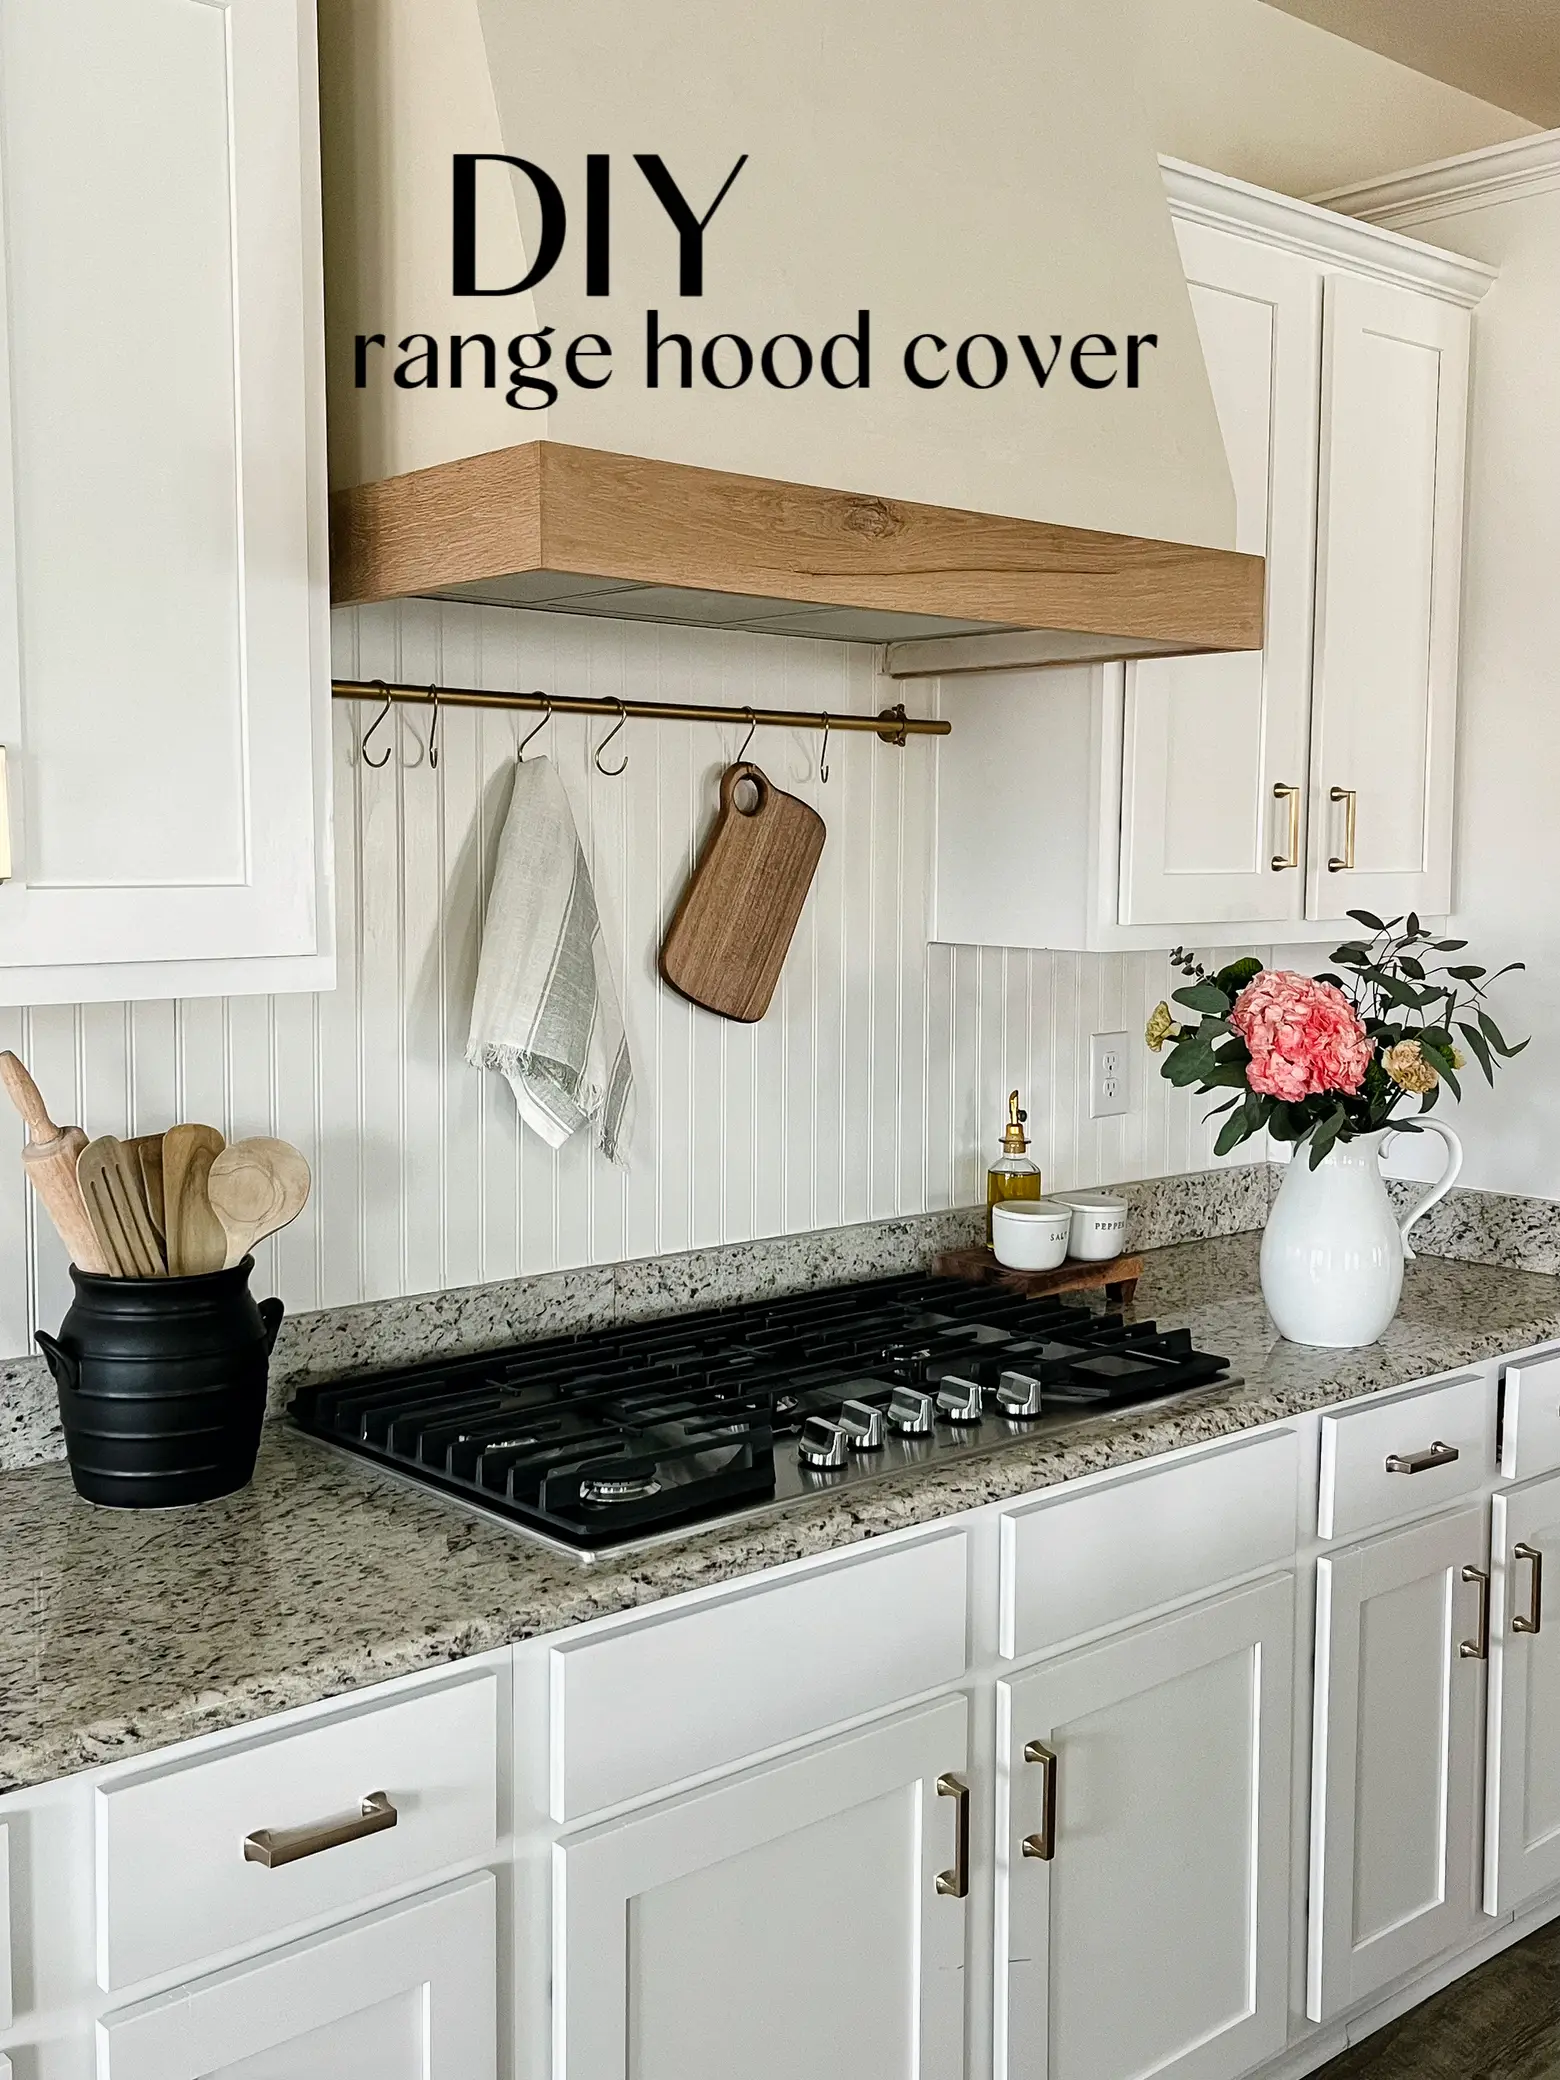 Covered Range Hood Ideas: Kitchen Inspiration  Kitchen renovation, Kitchen  inspirations, Kitchen range hood